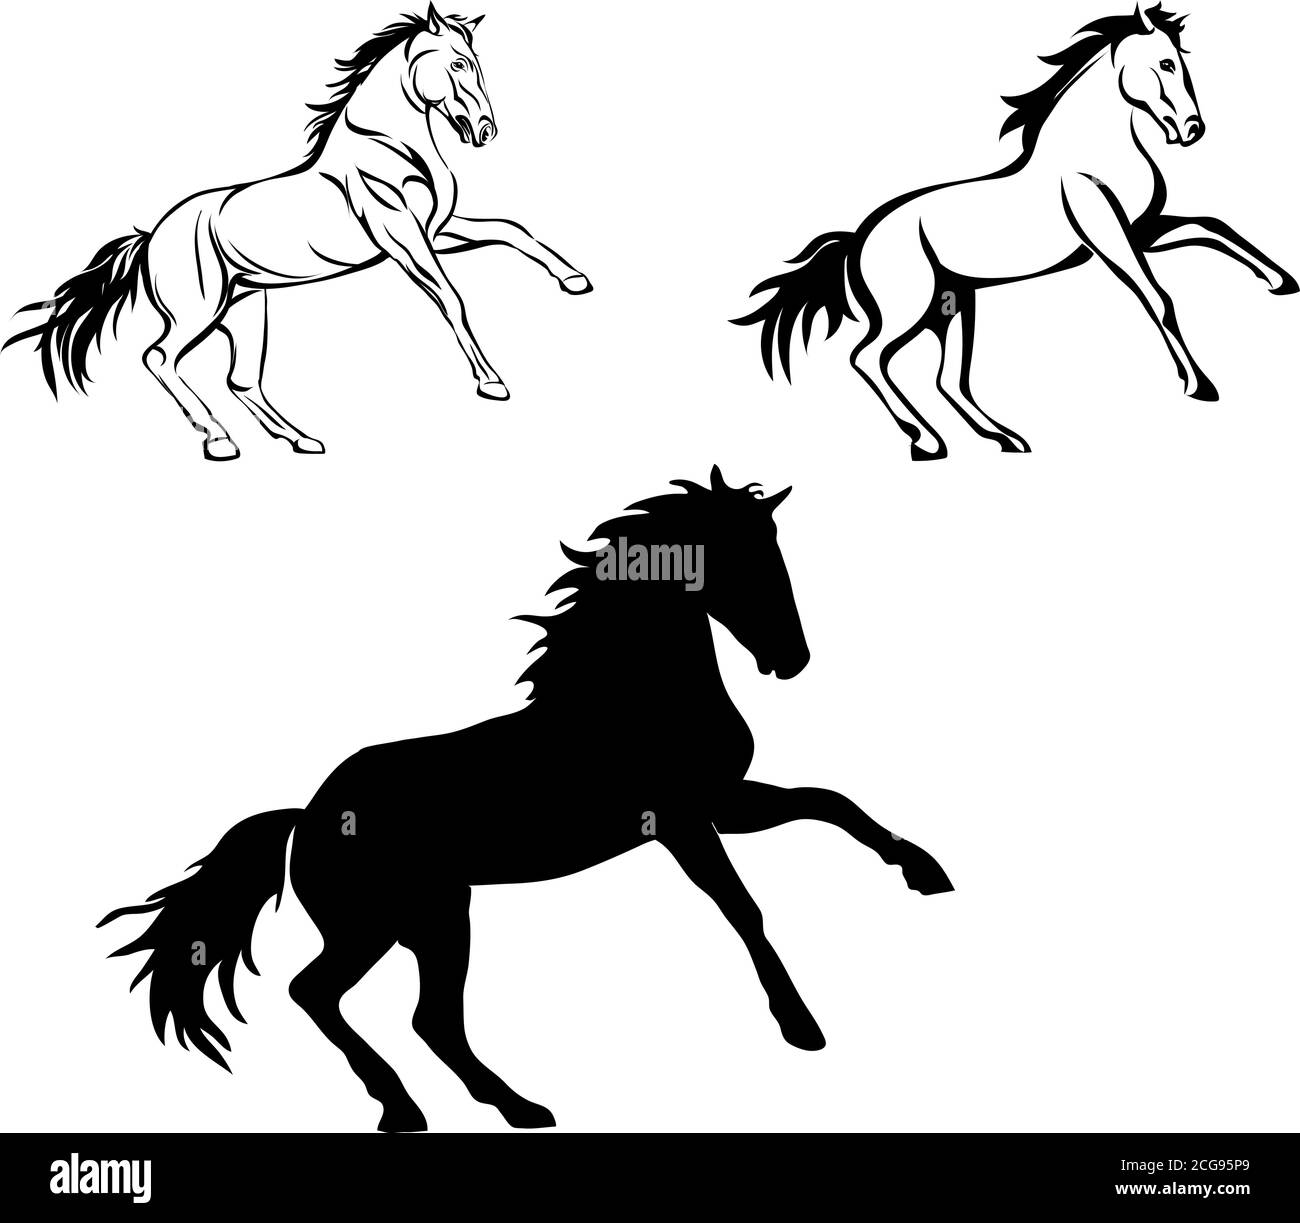 Horse, drawing, black, silhouette, symbol, illustration, image ...